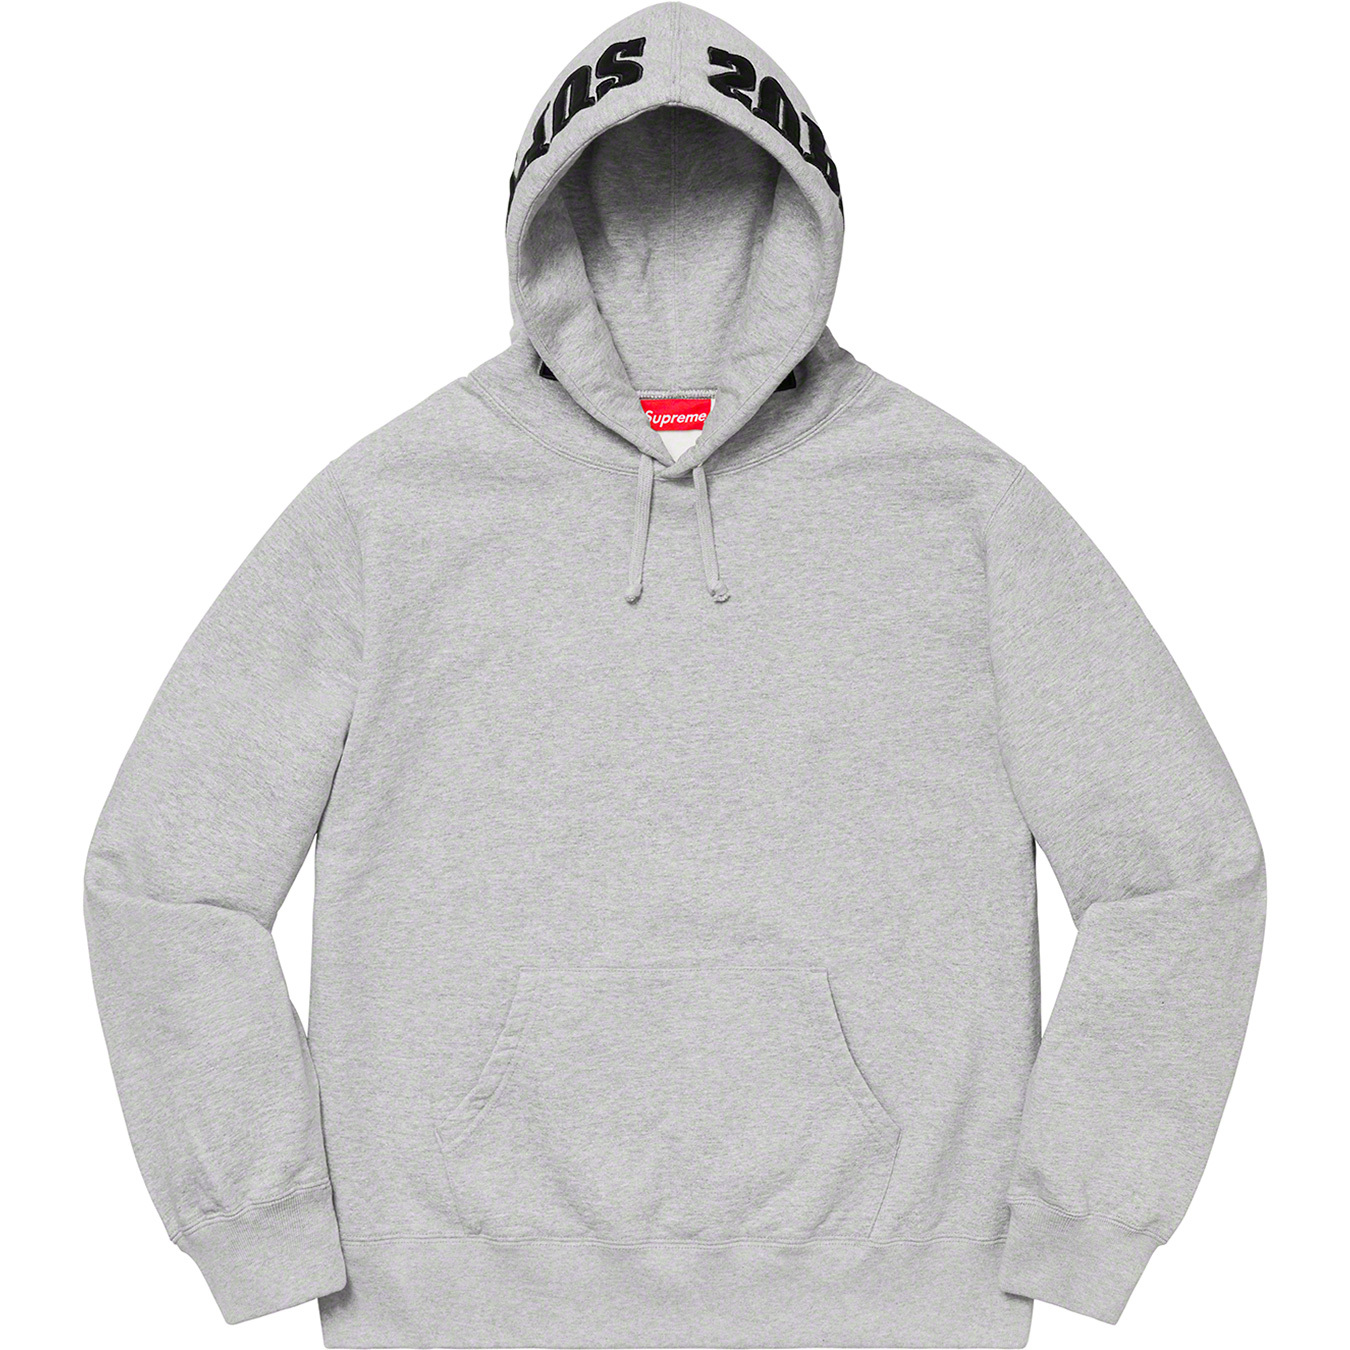 Mirrored Logo Hooded Sweatshirt - fall winter 2019 - Supreme